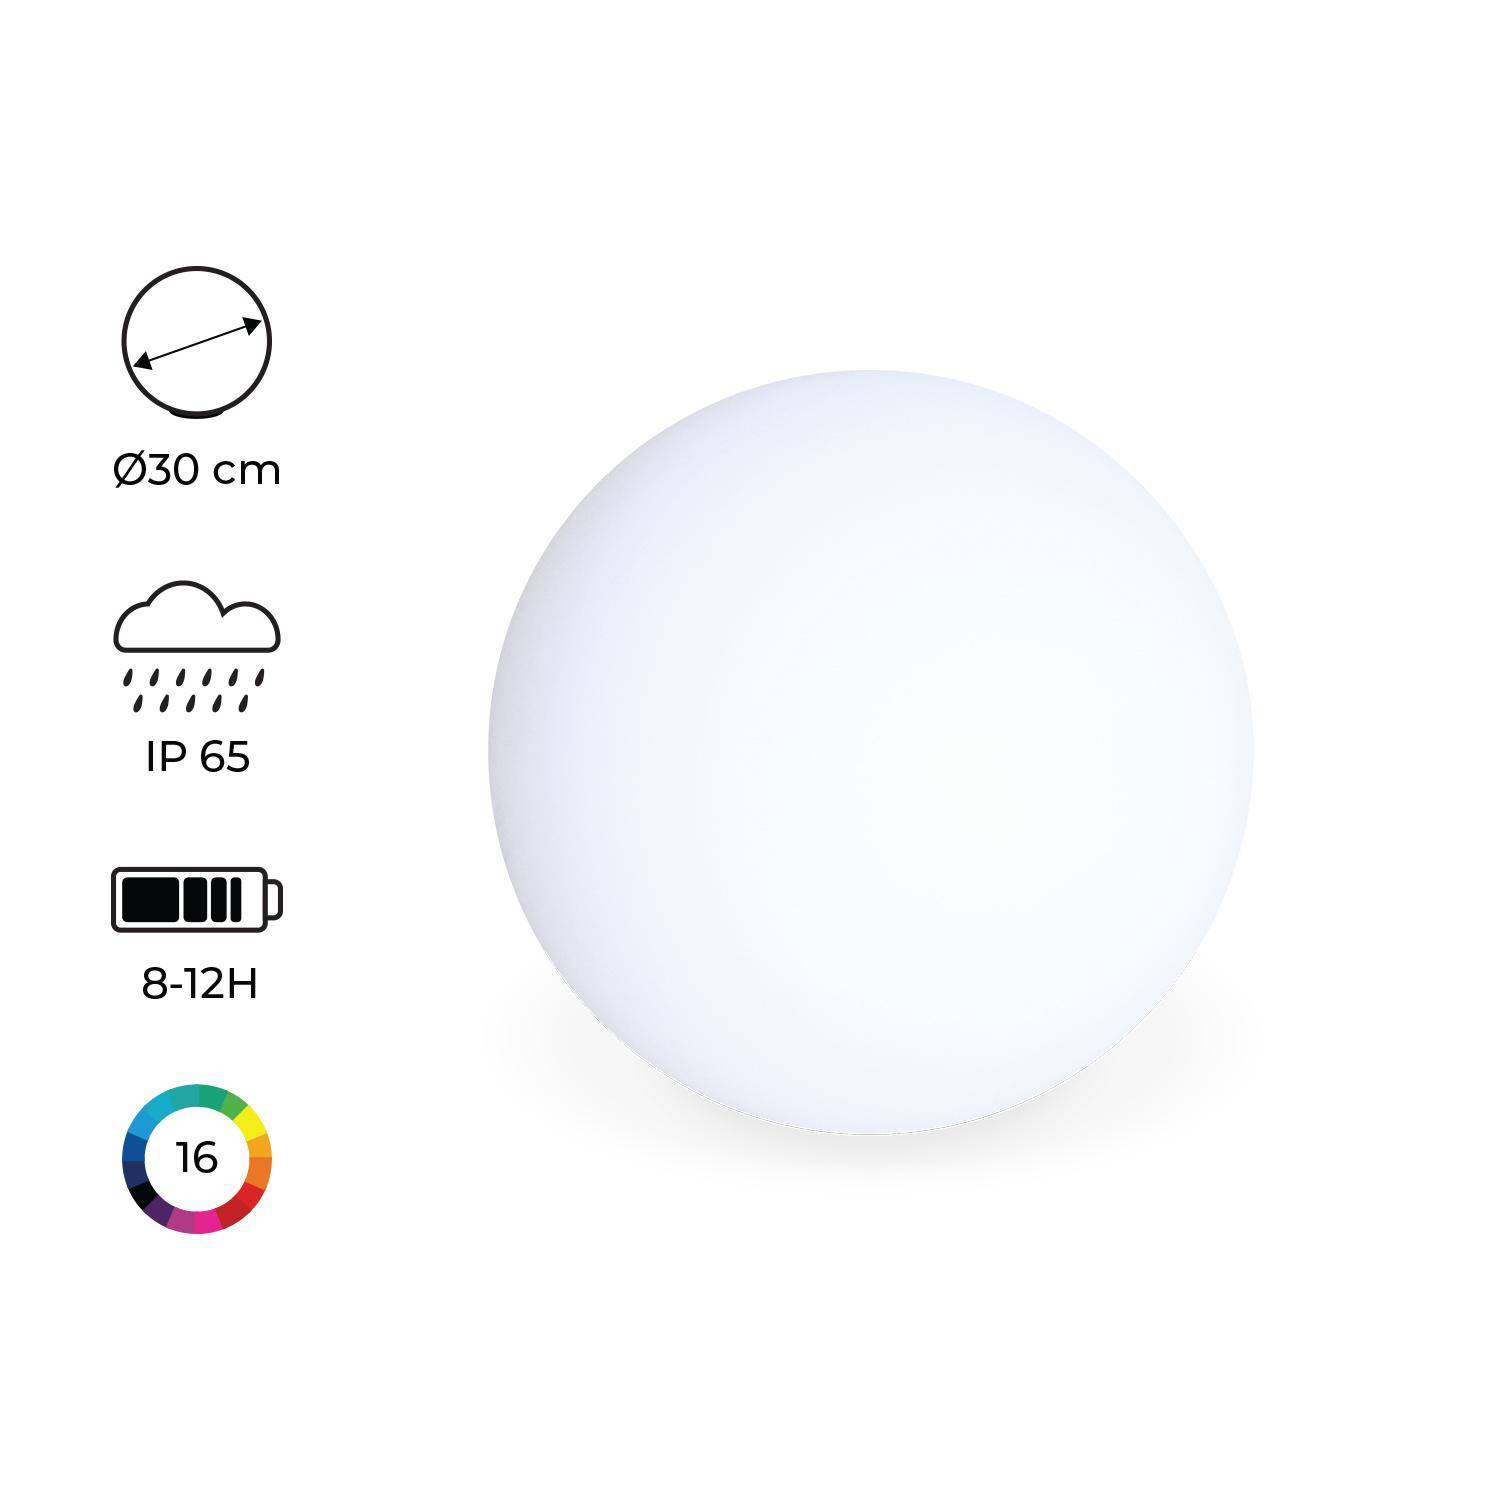 Lampada LED 30cm - Sfera decorativa luminosa,16 colori, Ø 30 cm, caricabatterie ad induzione senza fili. Photo1